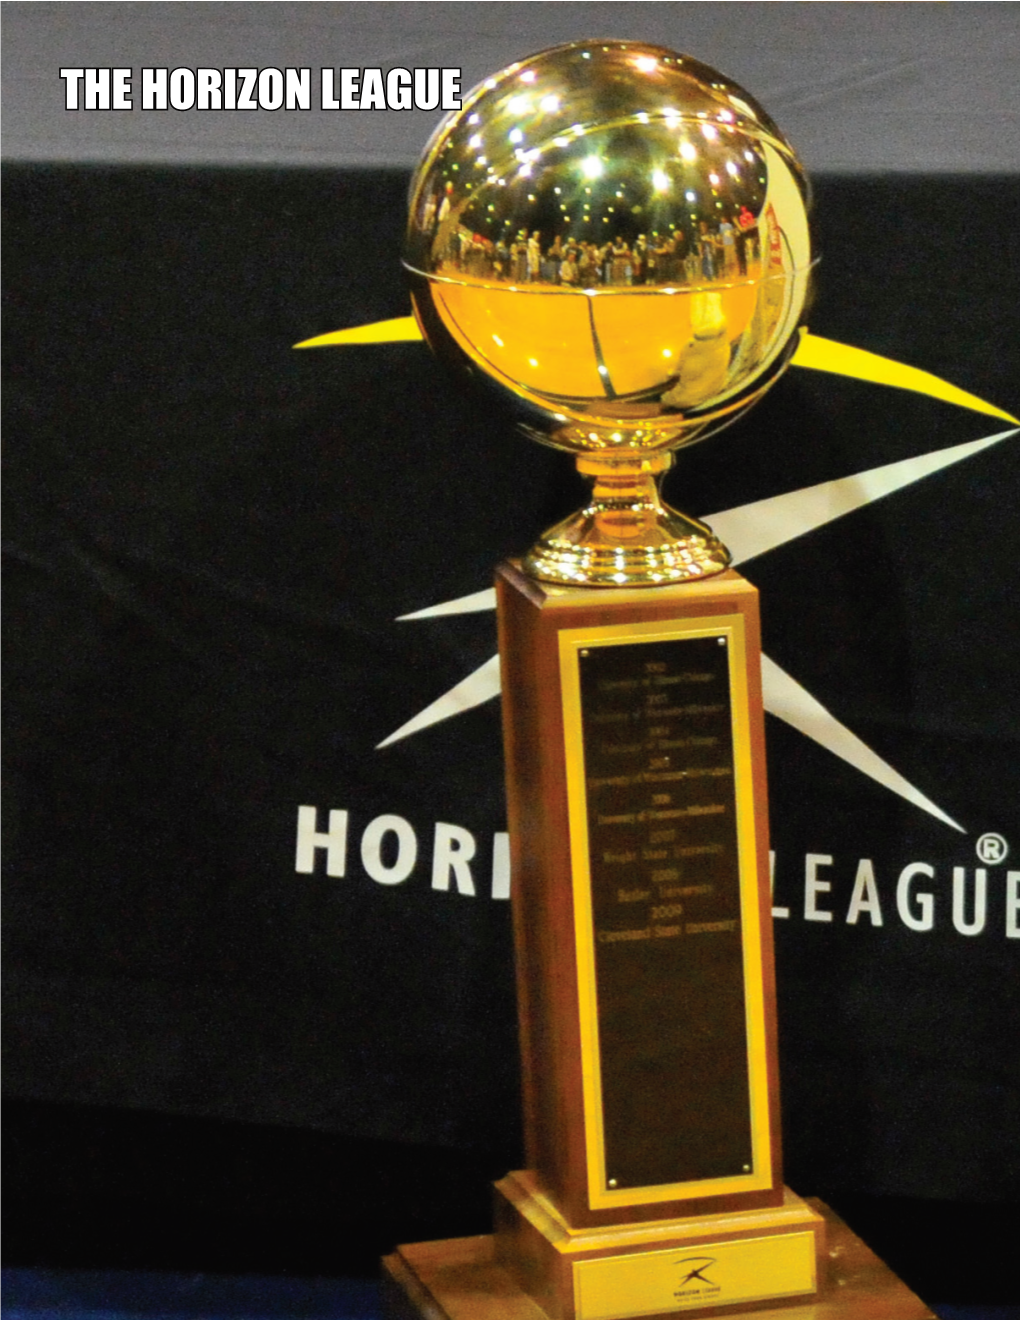 The Horizon League ®